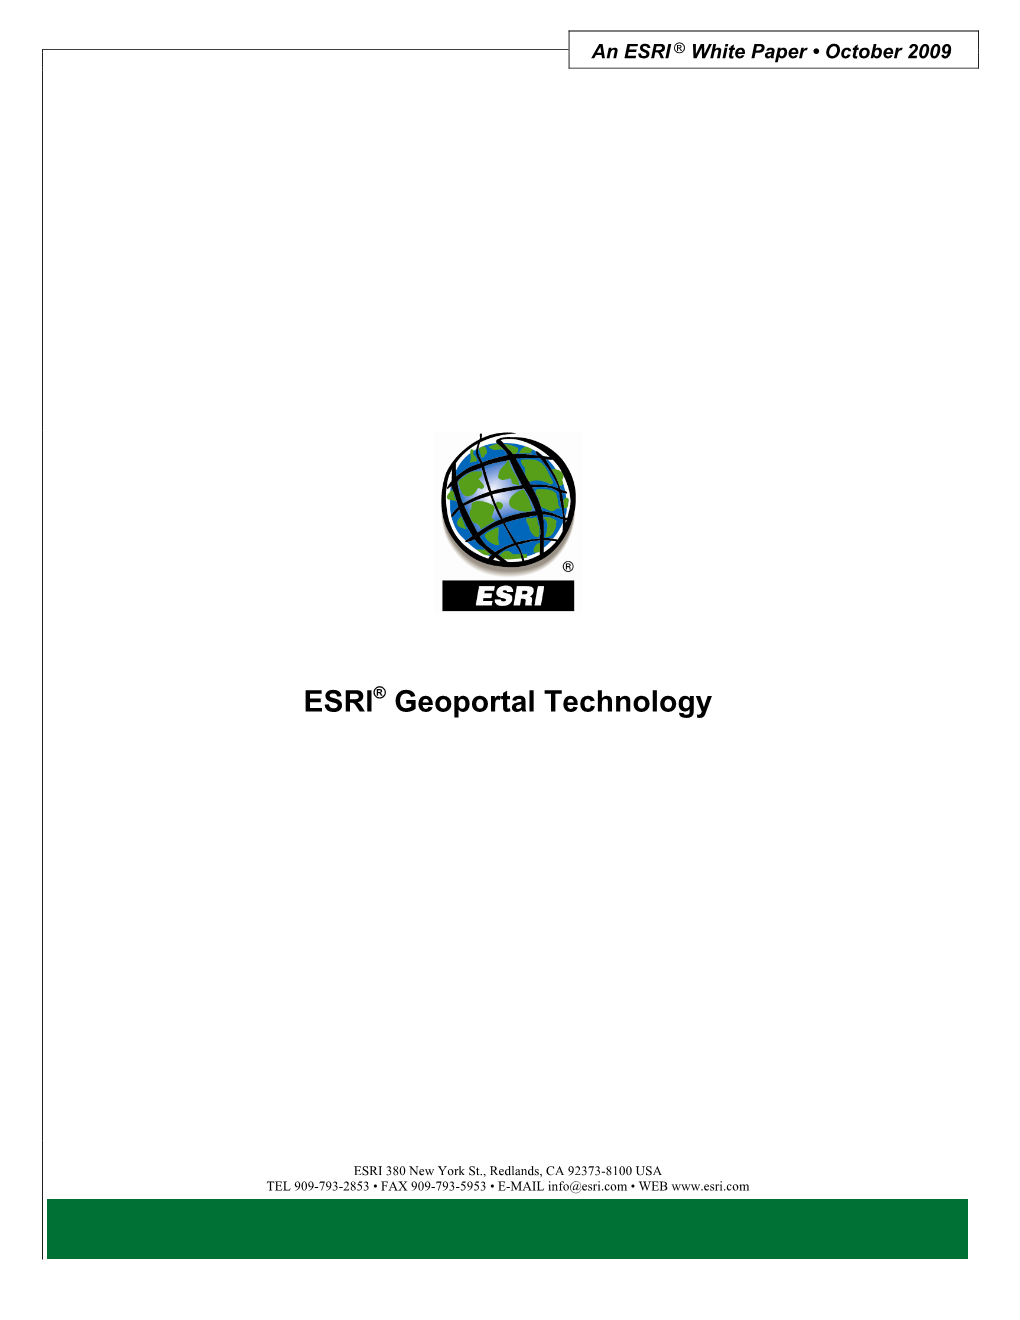 An ESRI White Paper October 2009 ESRI Geoportal Technology